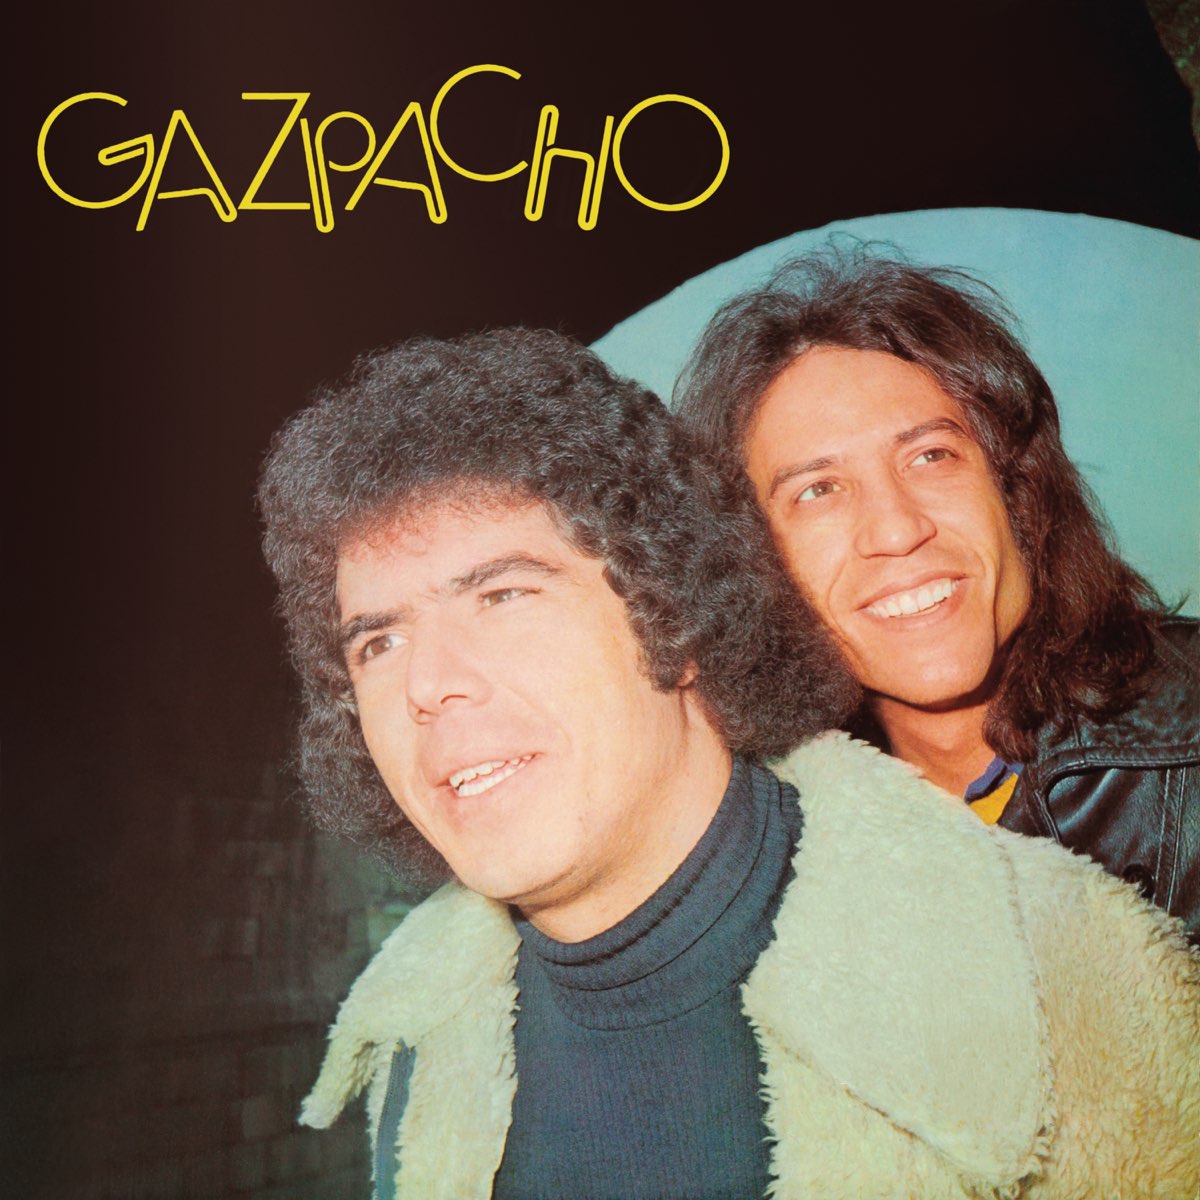 gazpacho band tour 2022